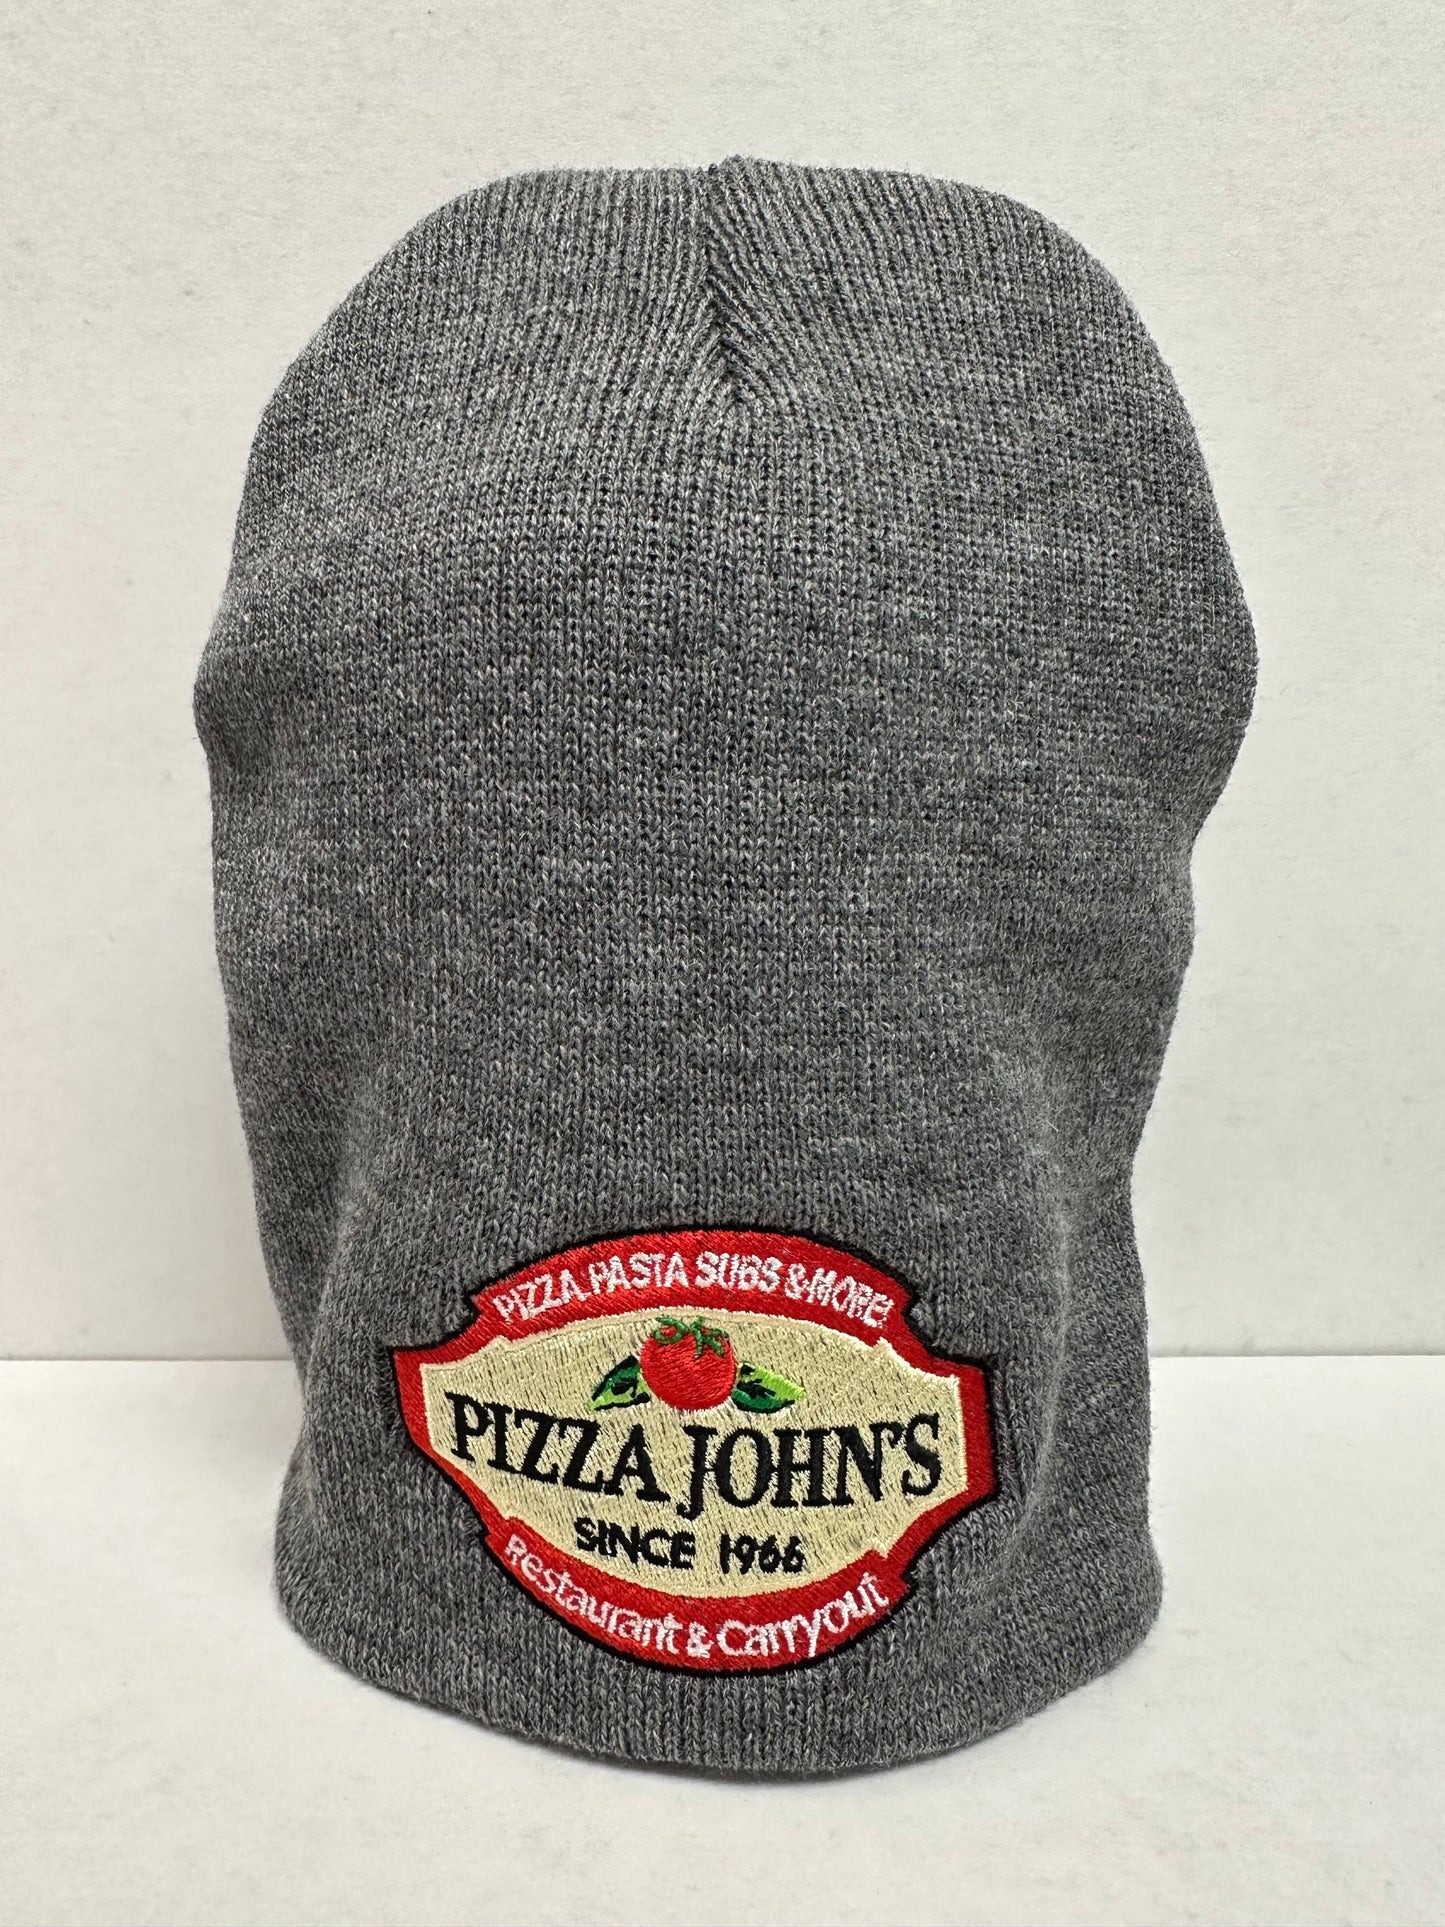 Pizza John’s winter beanies